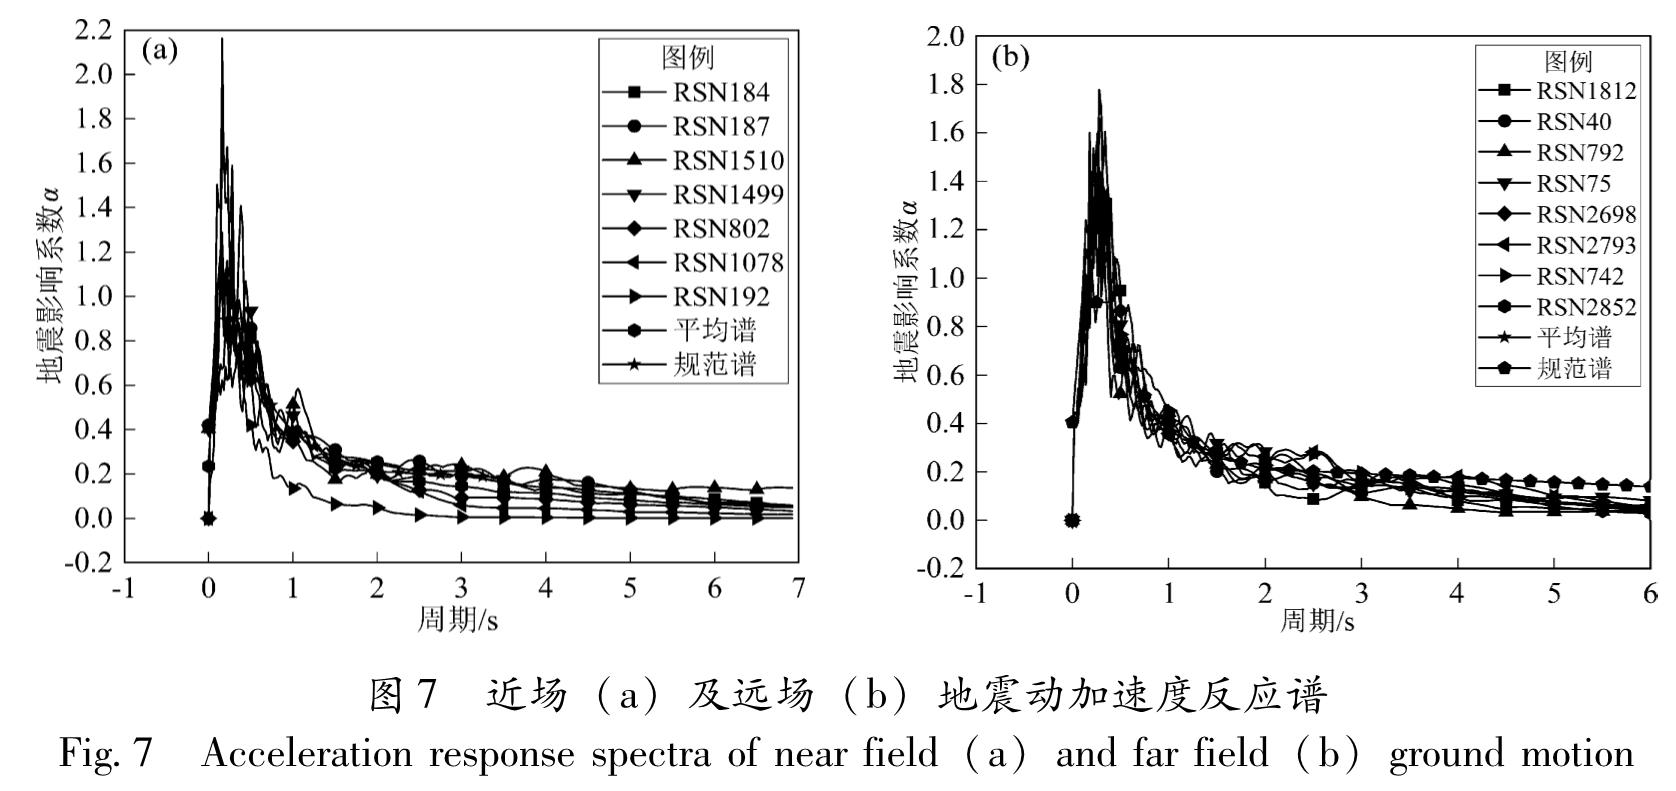 图7 近场(a)及远场(b)地震动加速度反应谱<br/>Fig.7 Acceleration response spectra of near field(a)and far field(b)ground motion